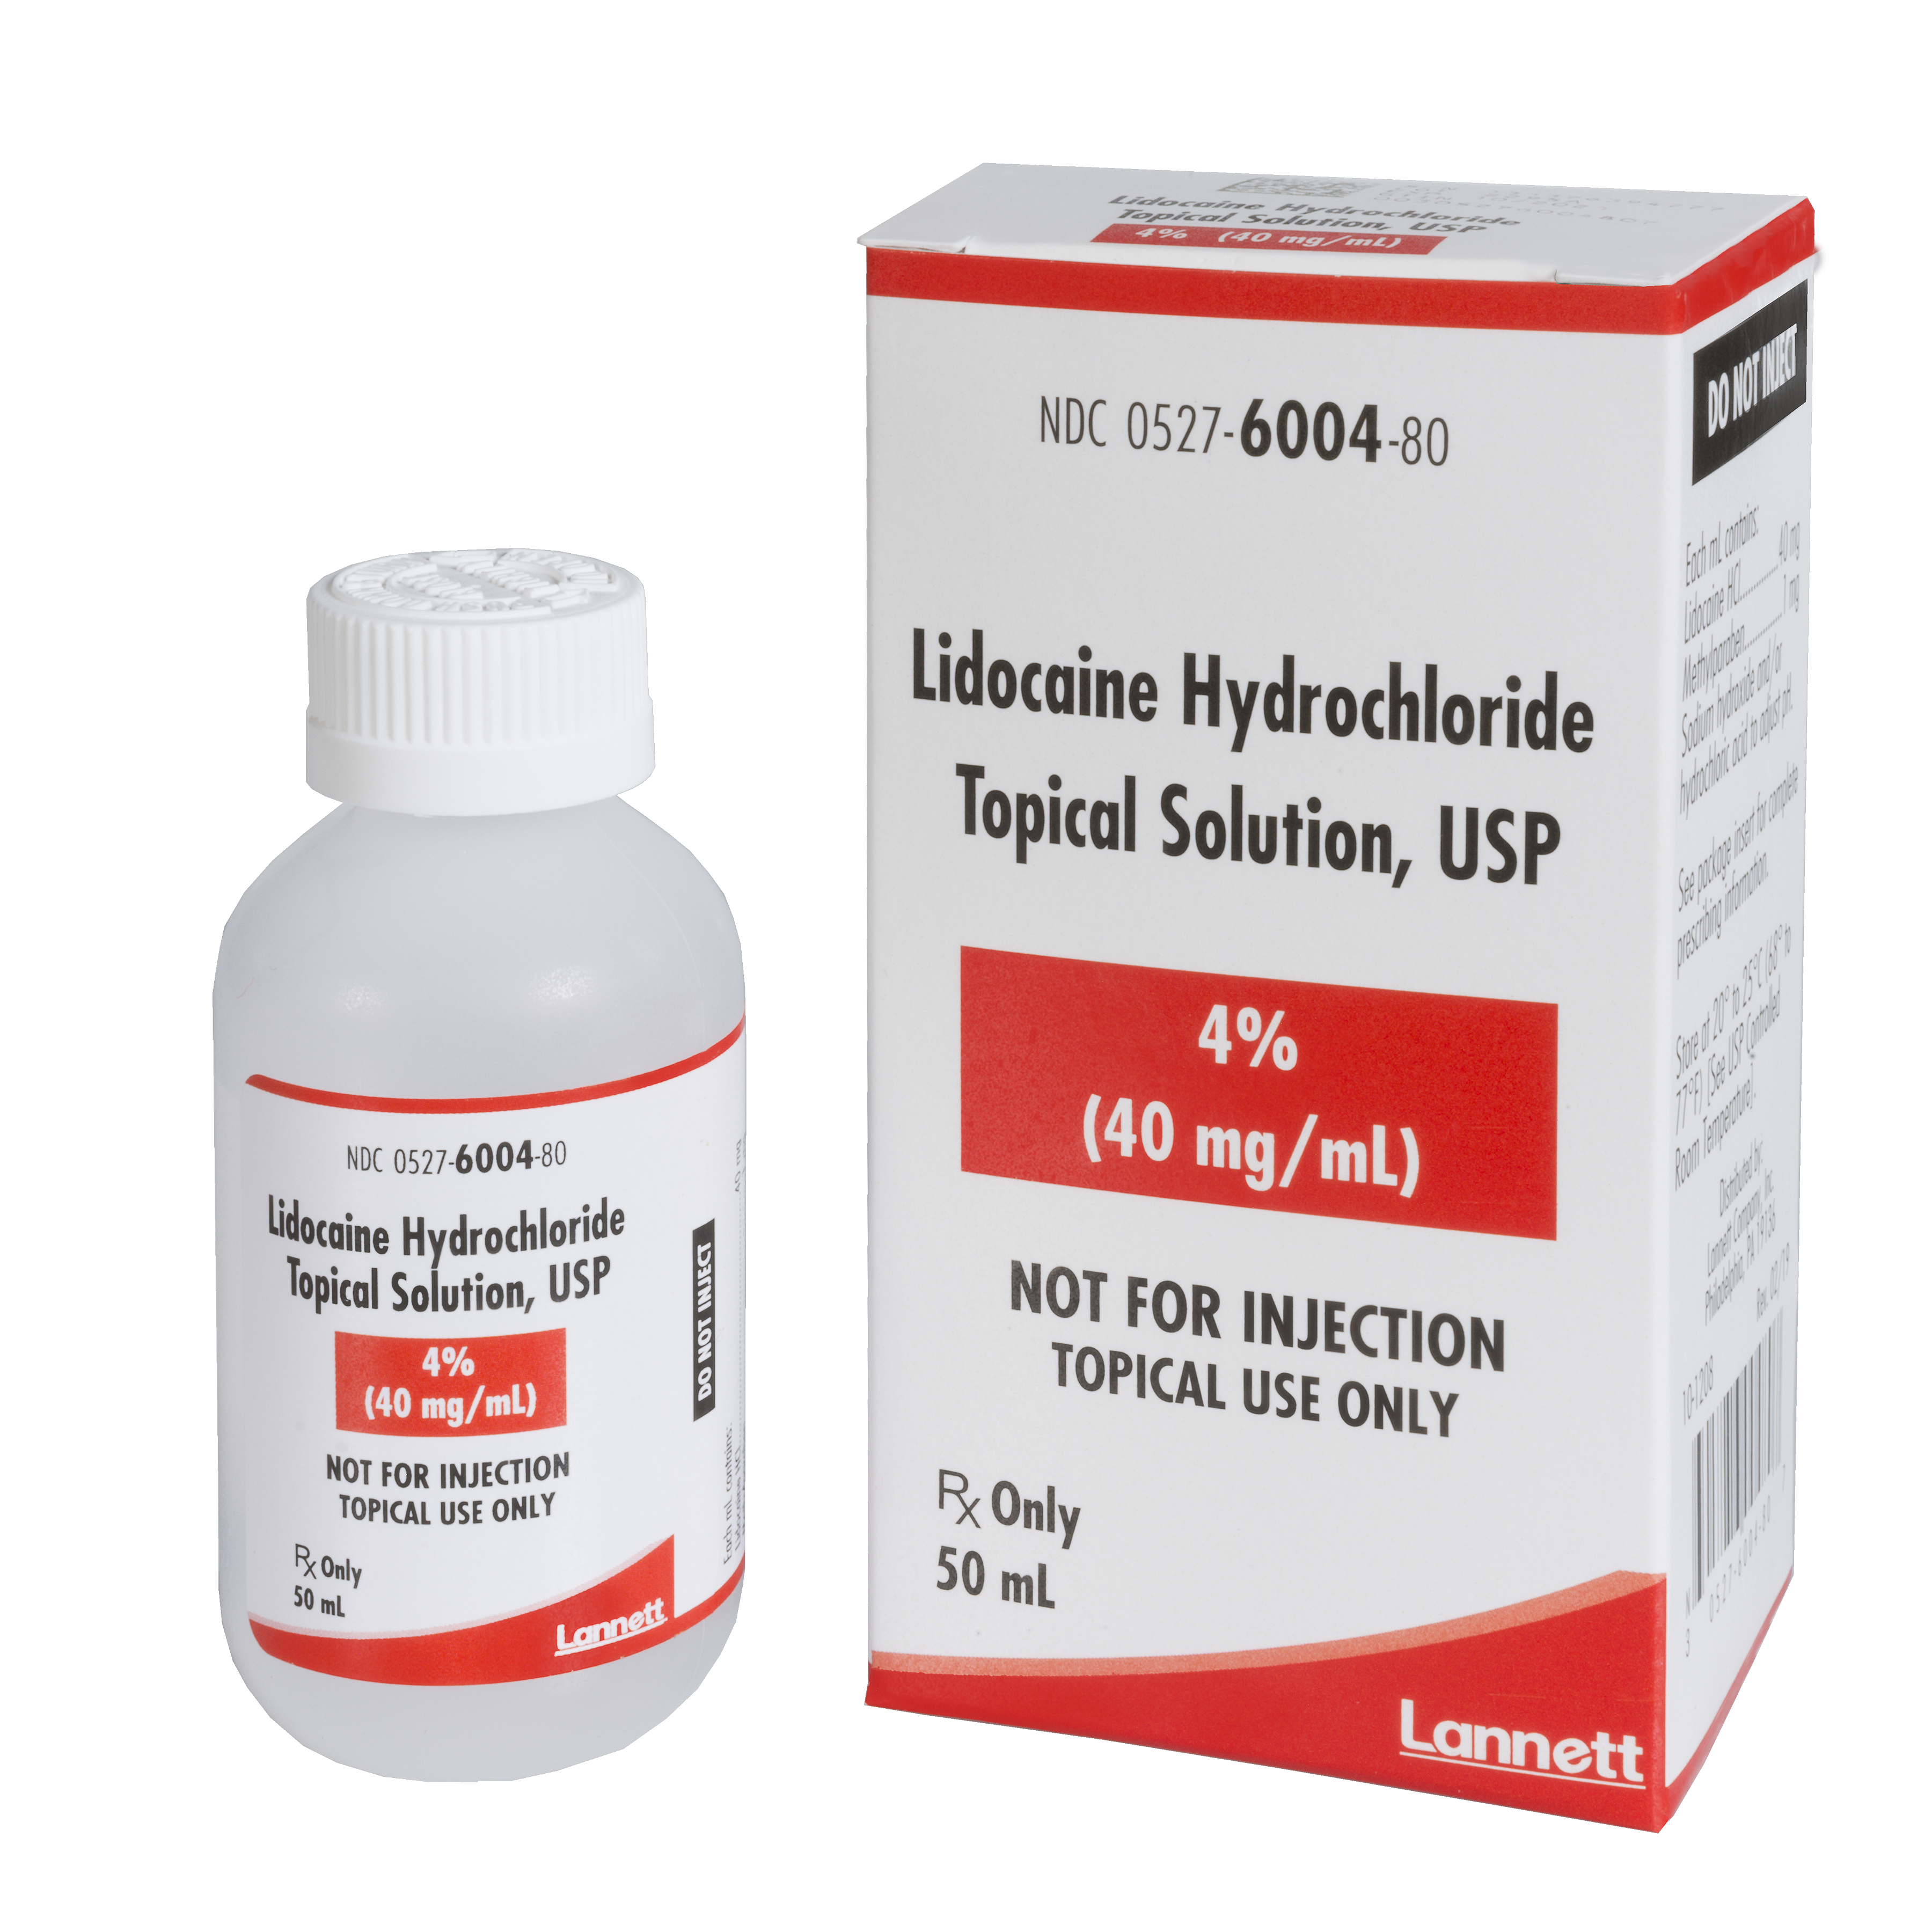 Lidocaine HCl